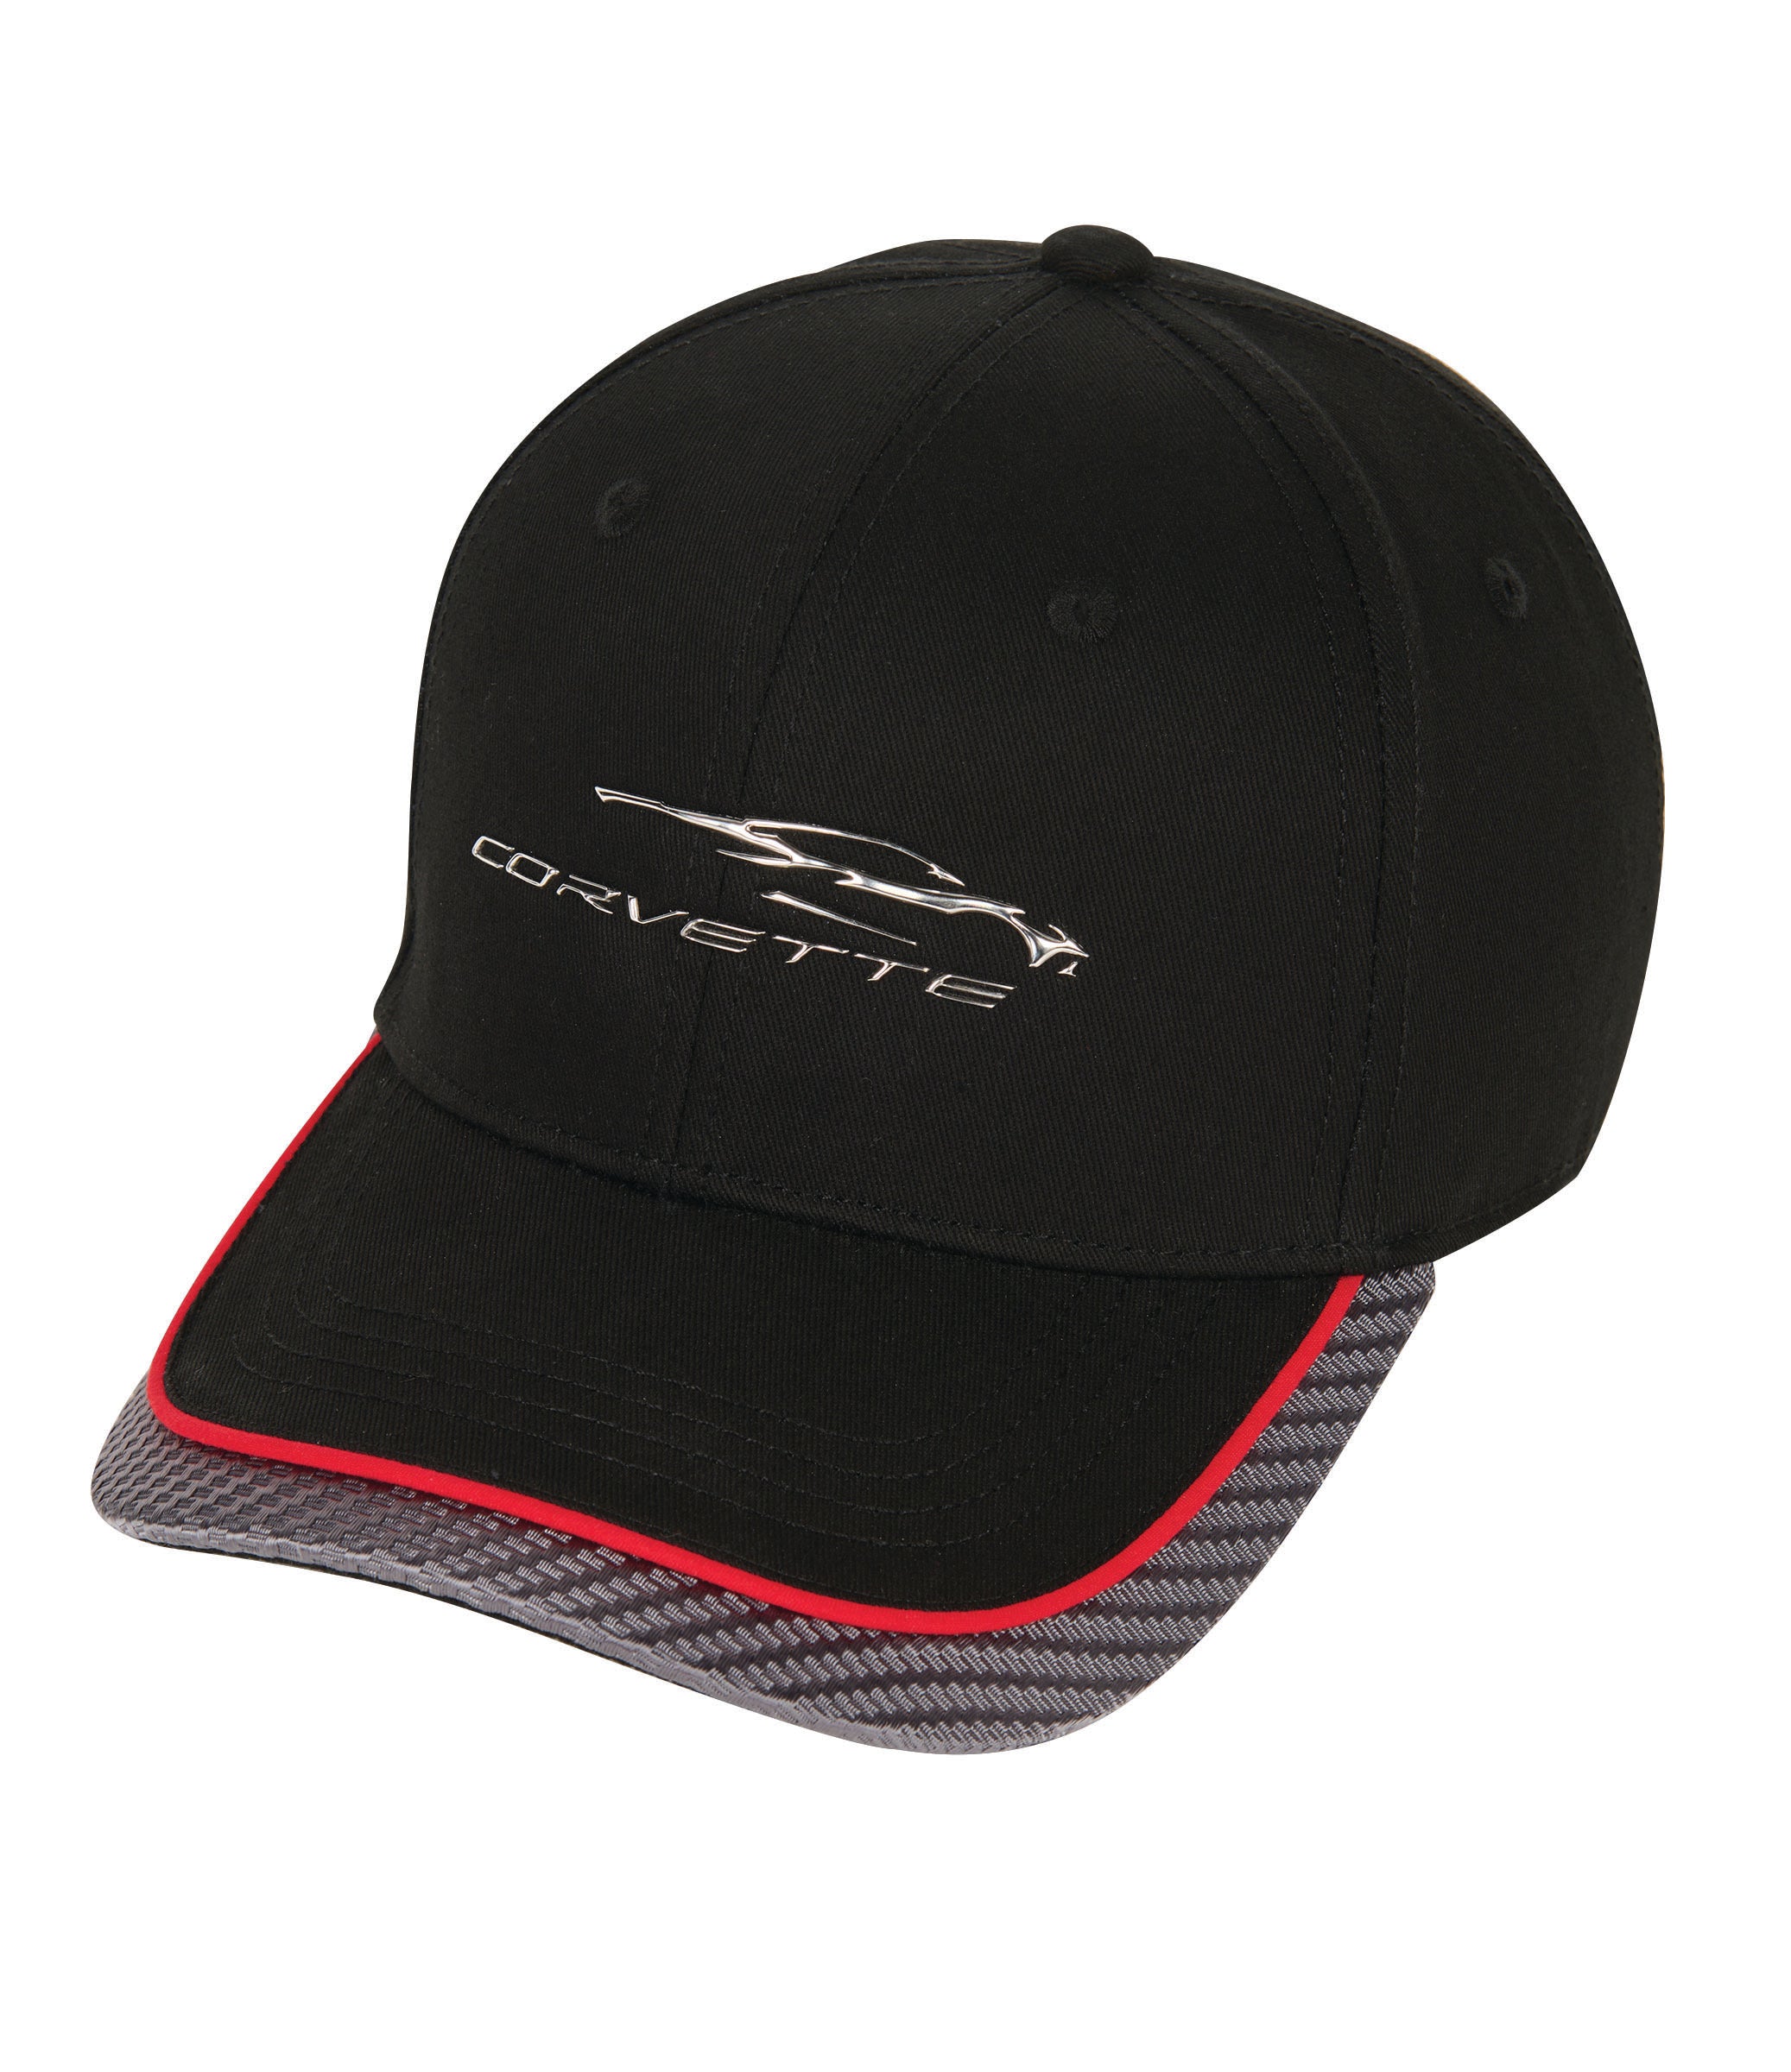 Next Generation Corvette Hat/Cap - Gesture Logo Red Stripe